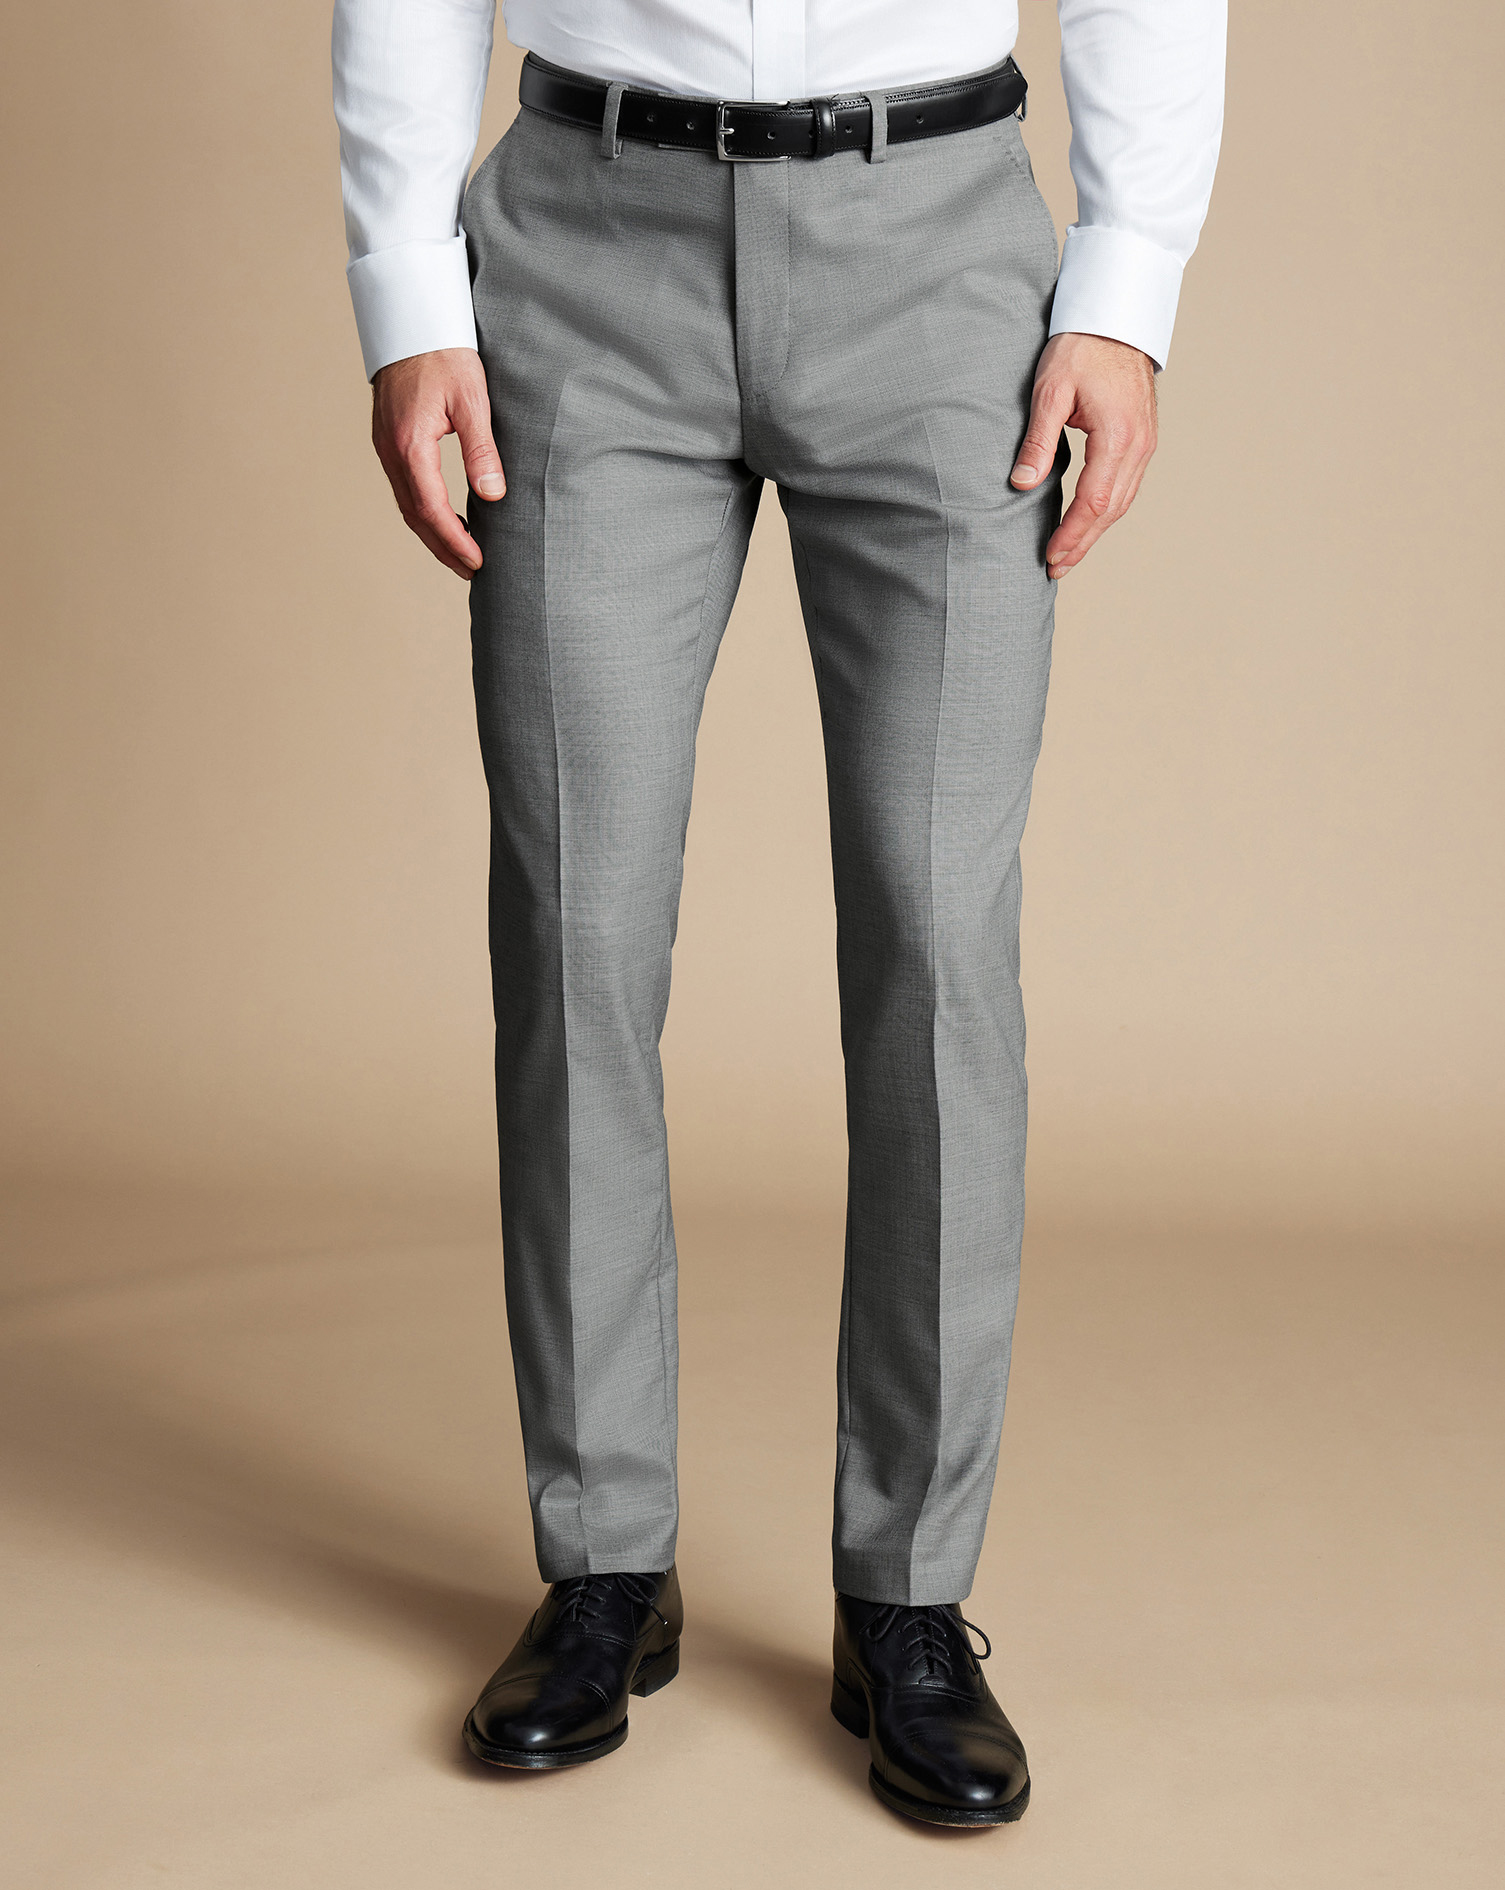 Men's Charles Tyrwhitt Ultimate Performance Sharkskin Suit Trousers - Grey Size 40/38
